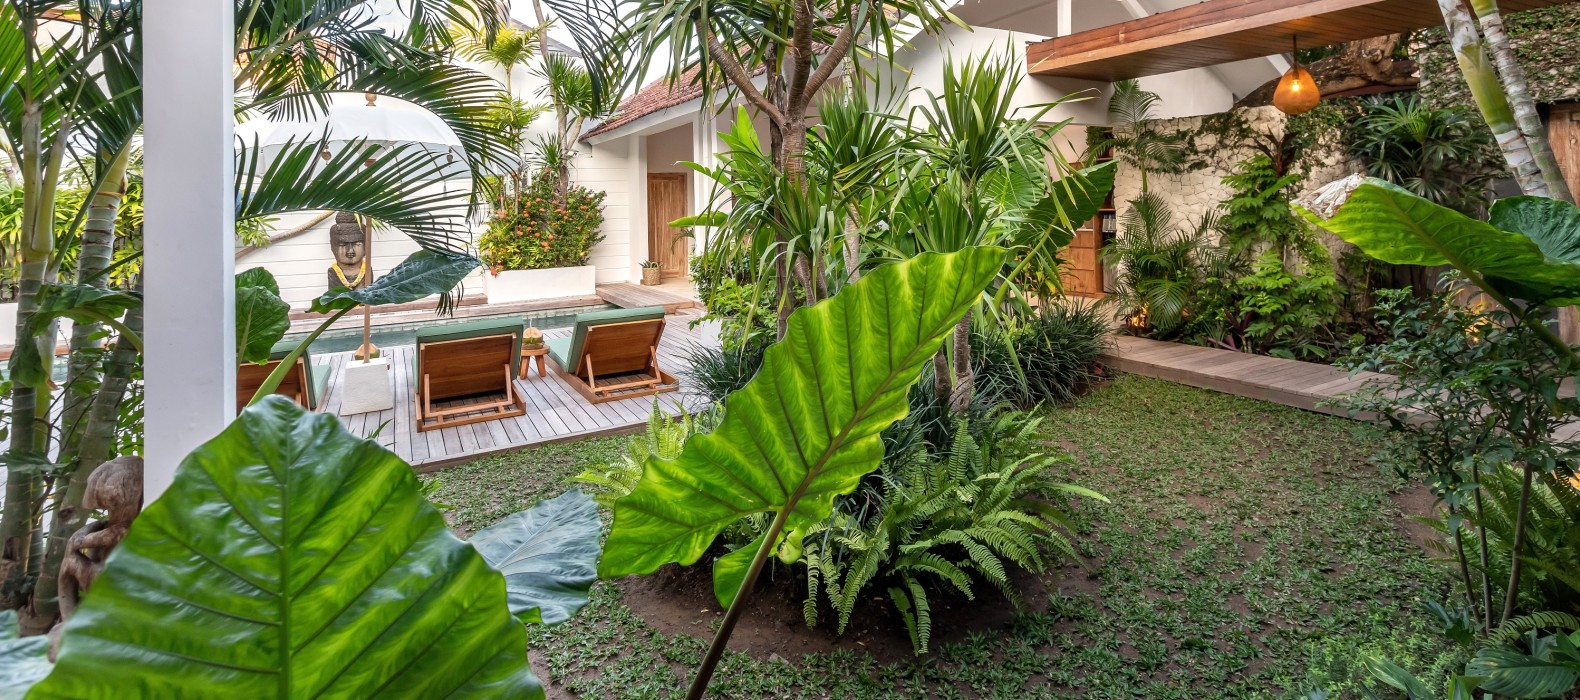 Garden of Villa Gauguin in Bali